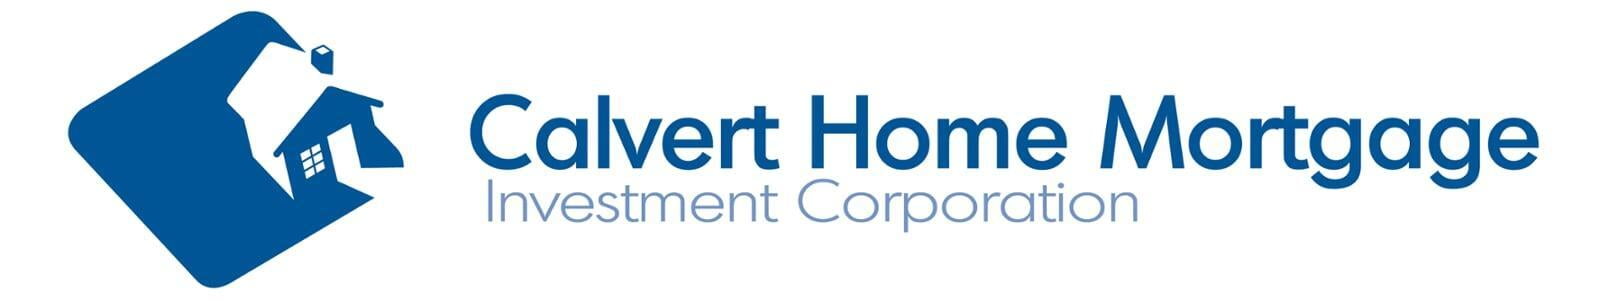 Calvert Home Mortgage Investment Corporation Logo